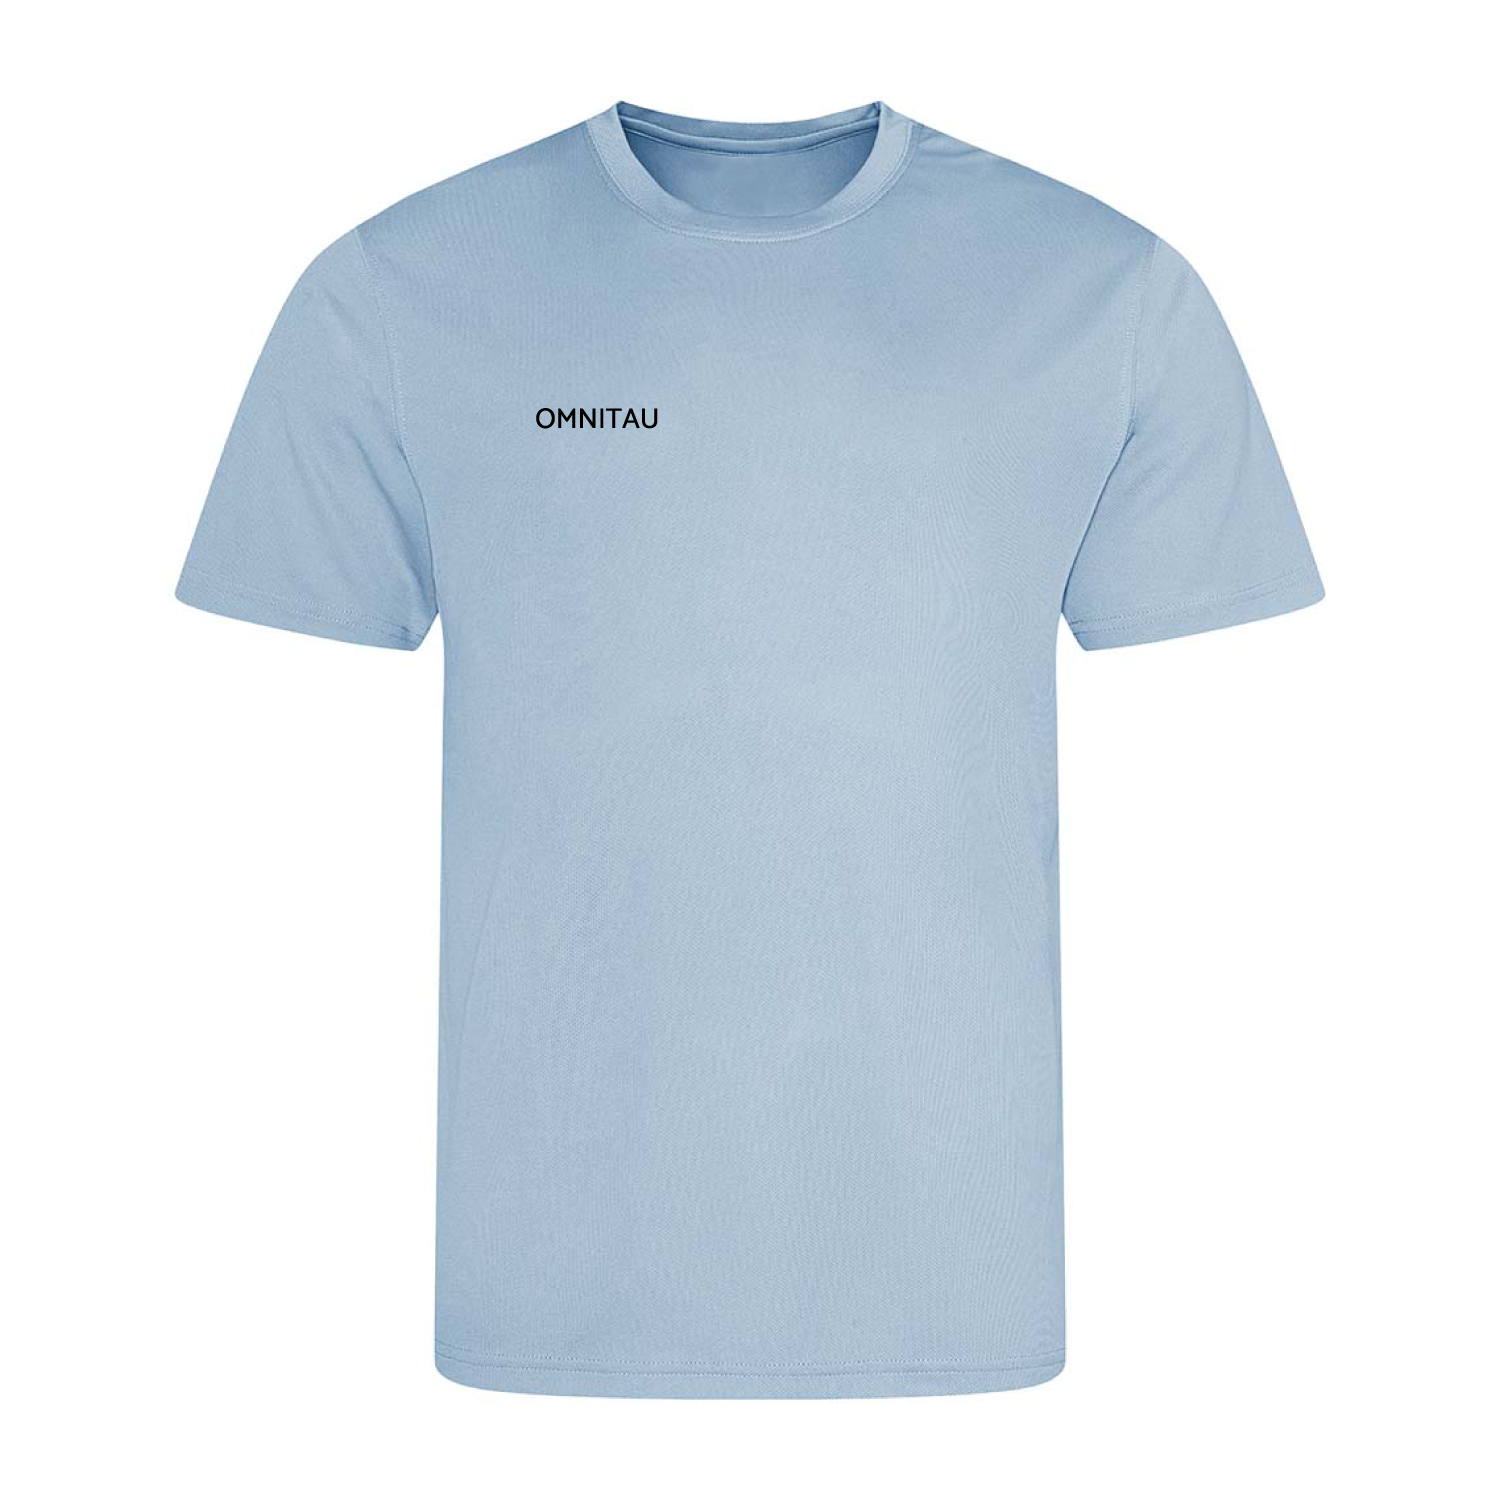 Omnitau Women's Team Sports Core Football Shirt - Sky Blue